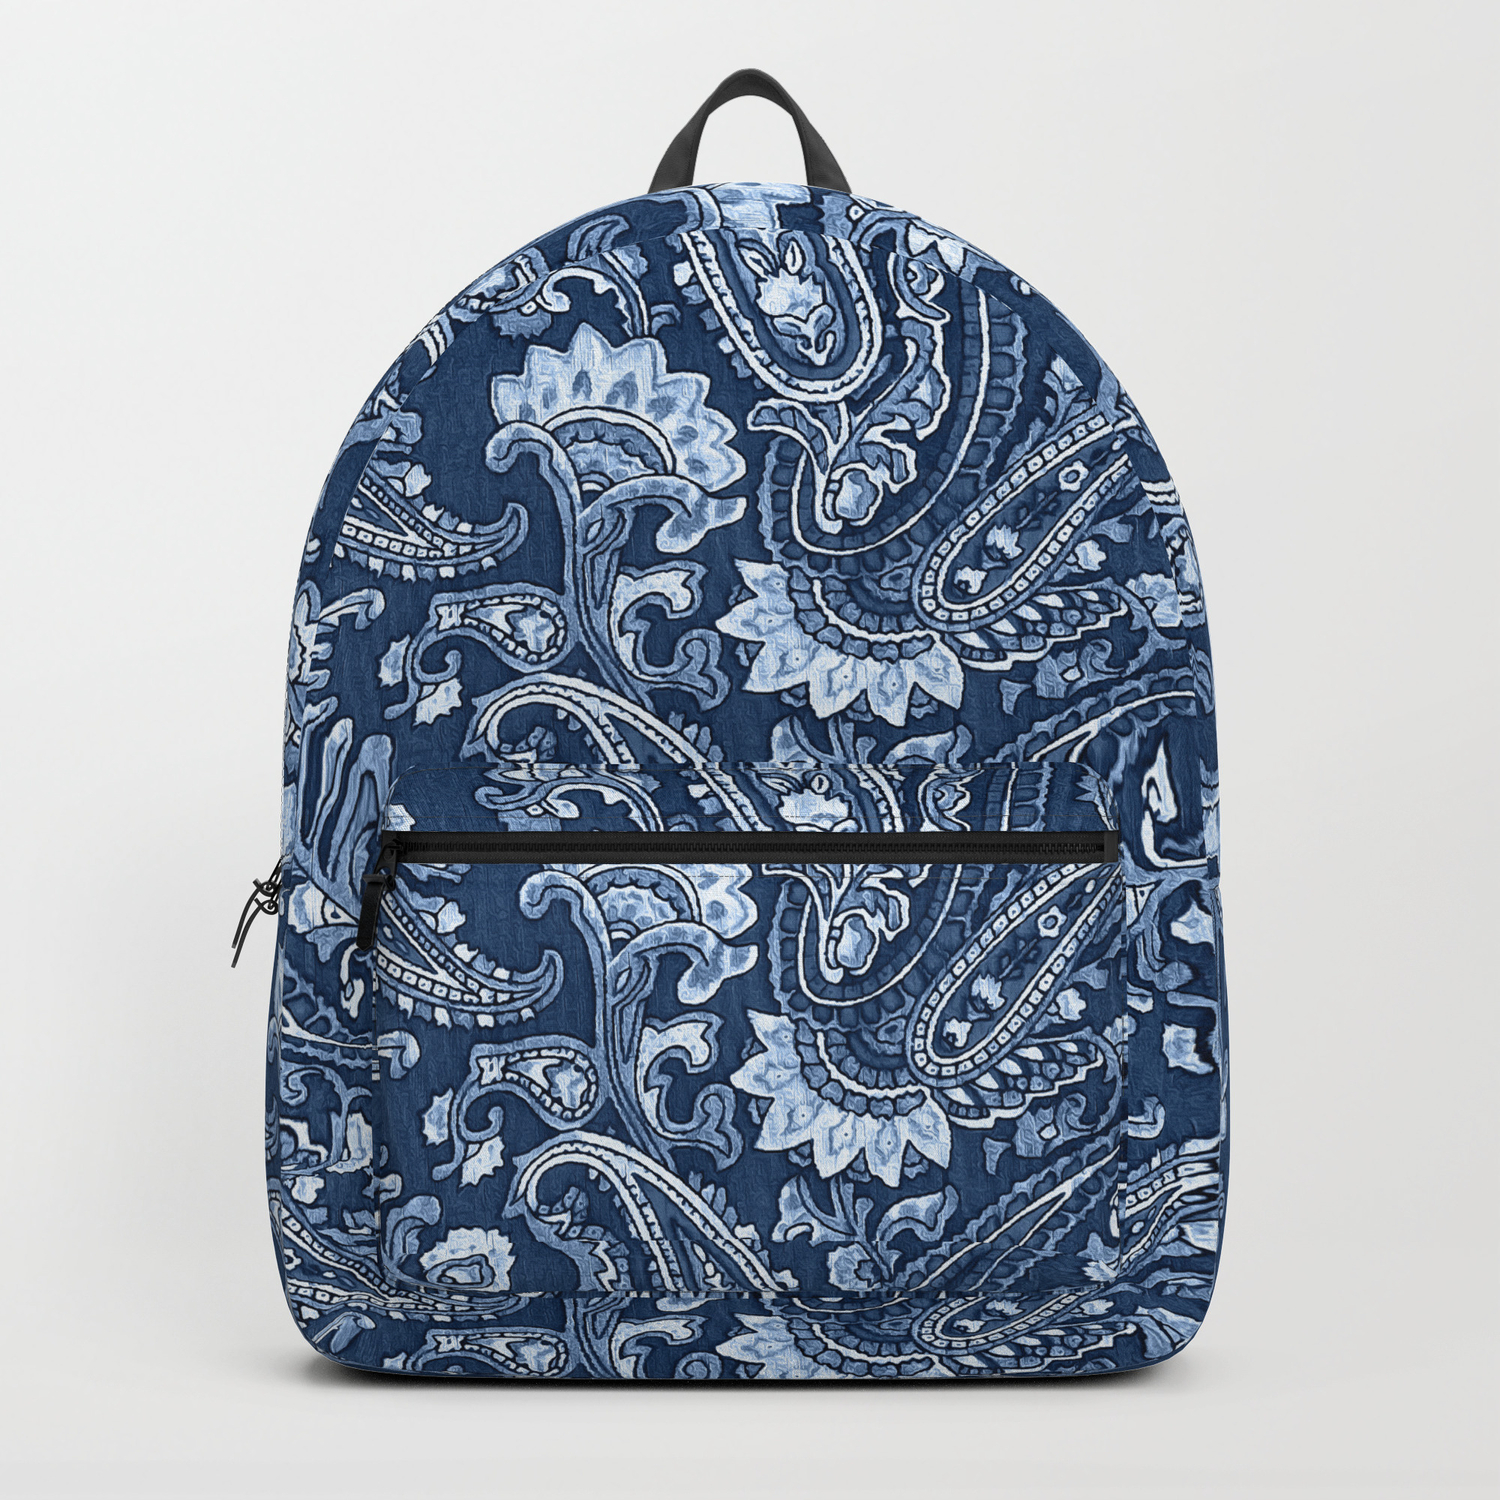 A-Z Customizable School BackpackBlue Half Damask Design 